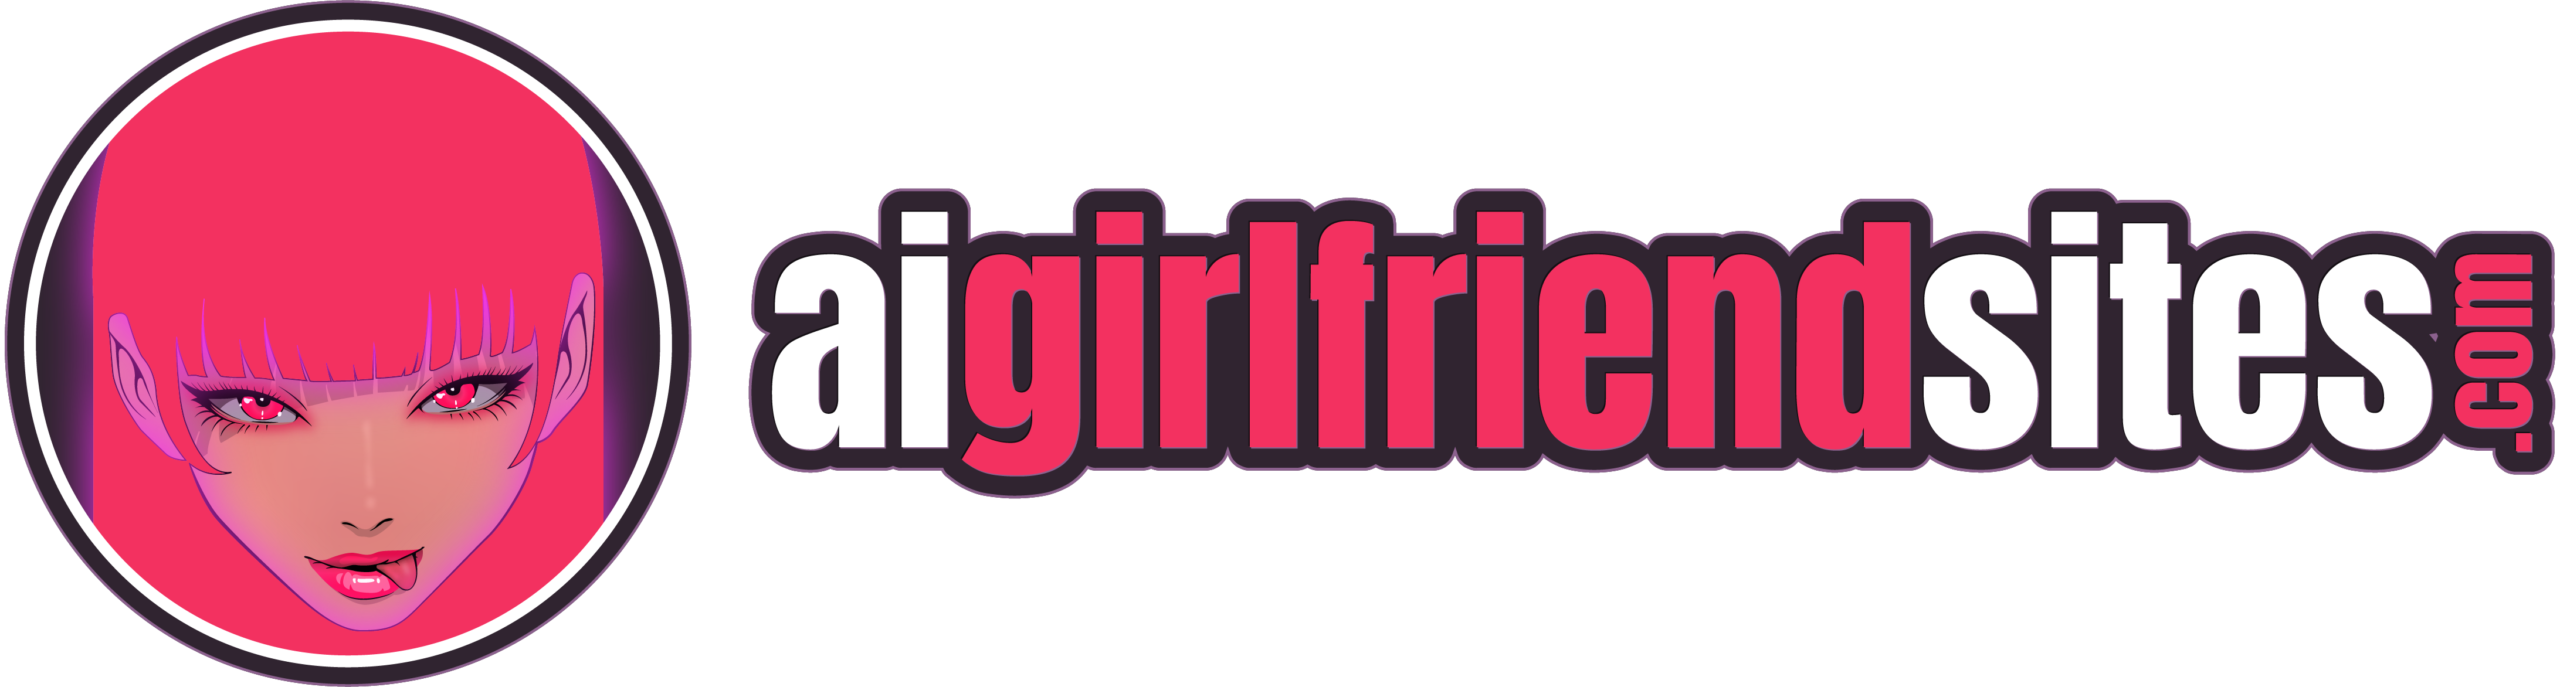 ai girlfriend sites logo